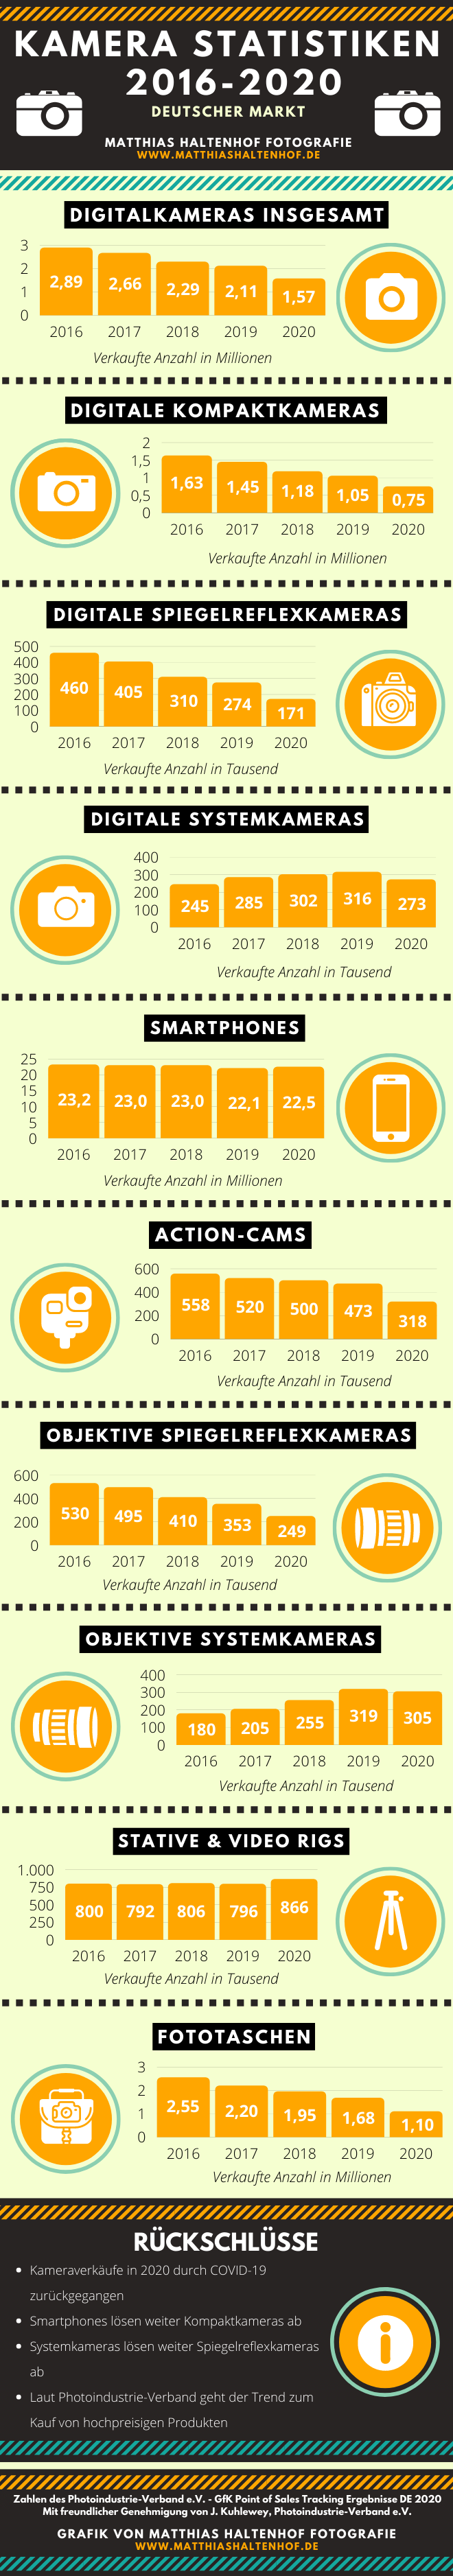 infografik kamera statistiken de 2016 2020 v8